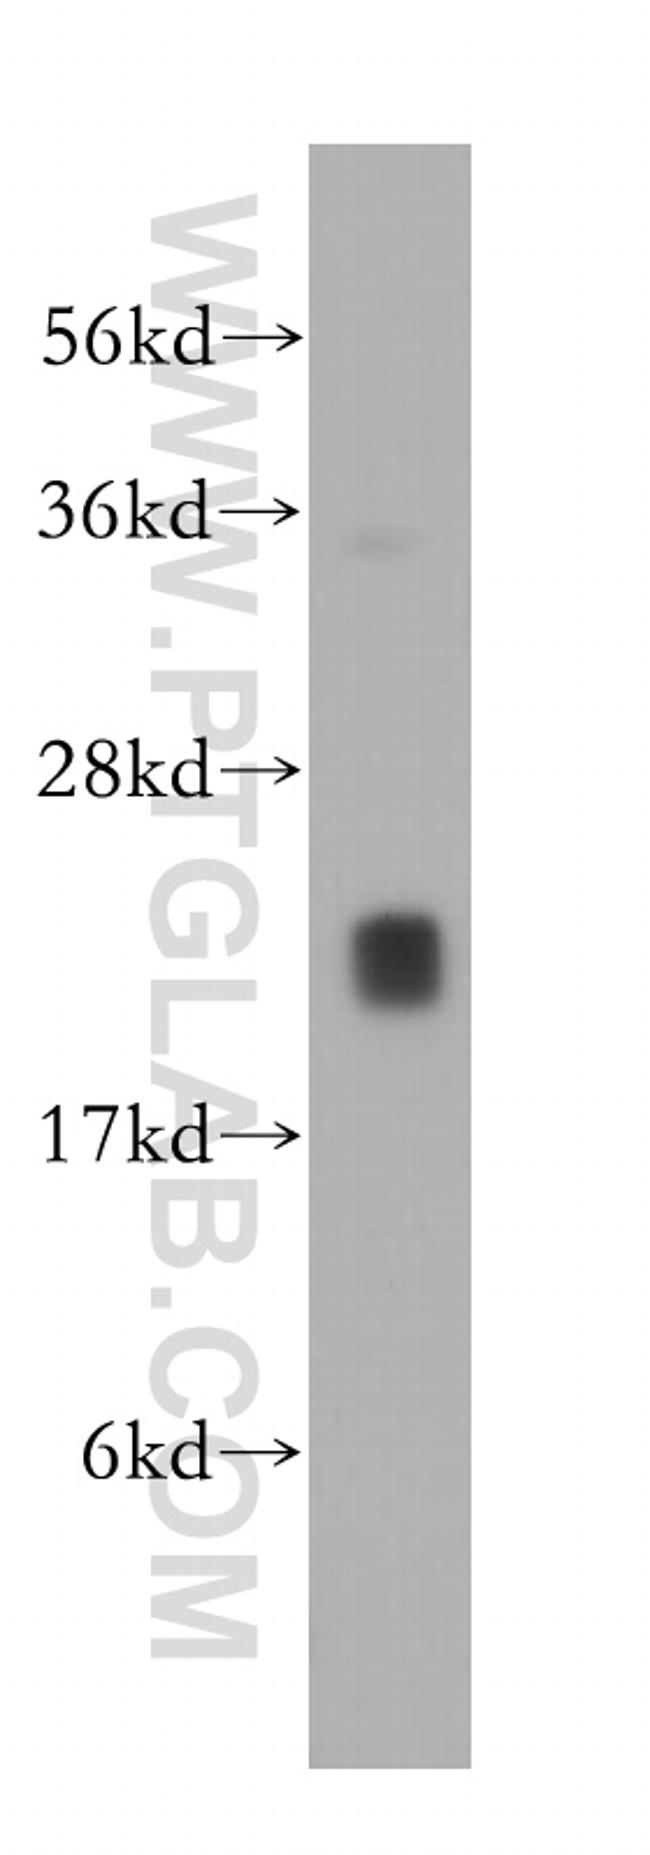 GLO1 Antibody in Western Blot (WB)